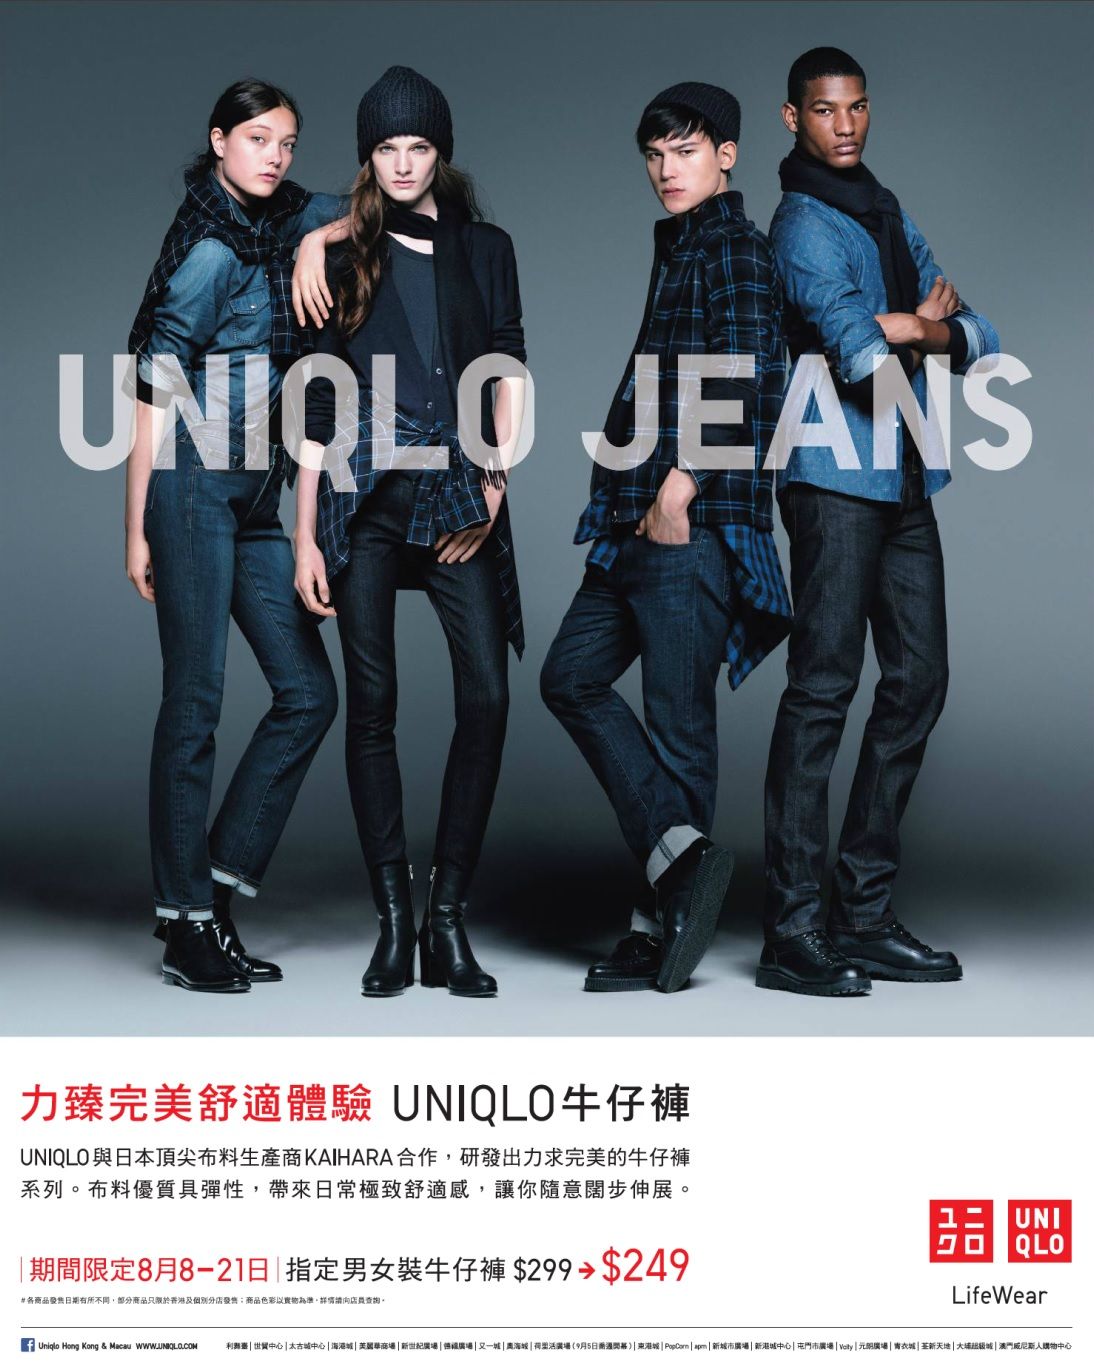 Uniqlo 男女裝牛仔褲限定價發售- Timable Hong Kong Event